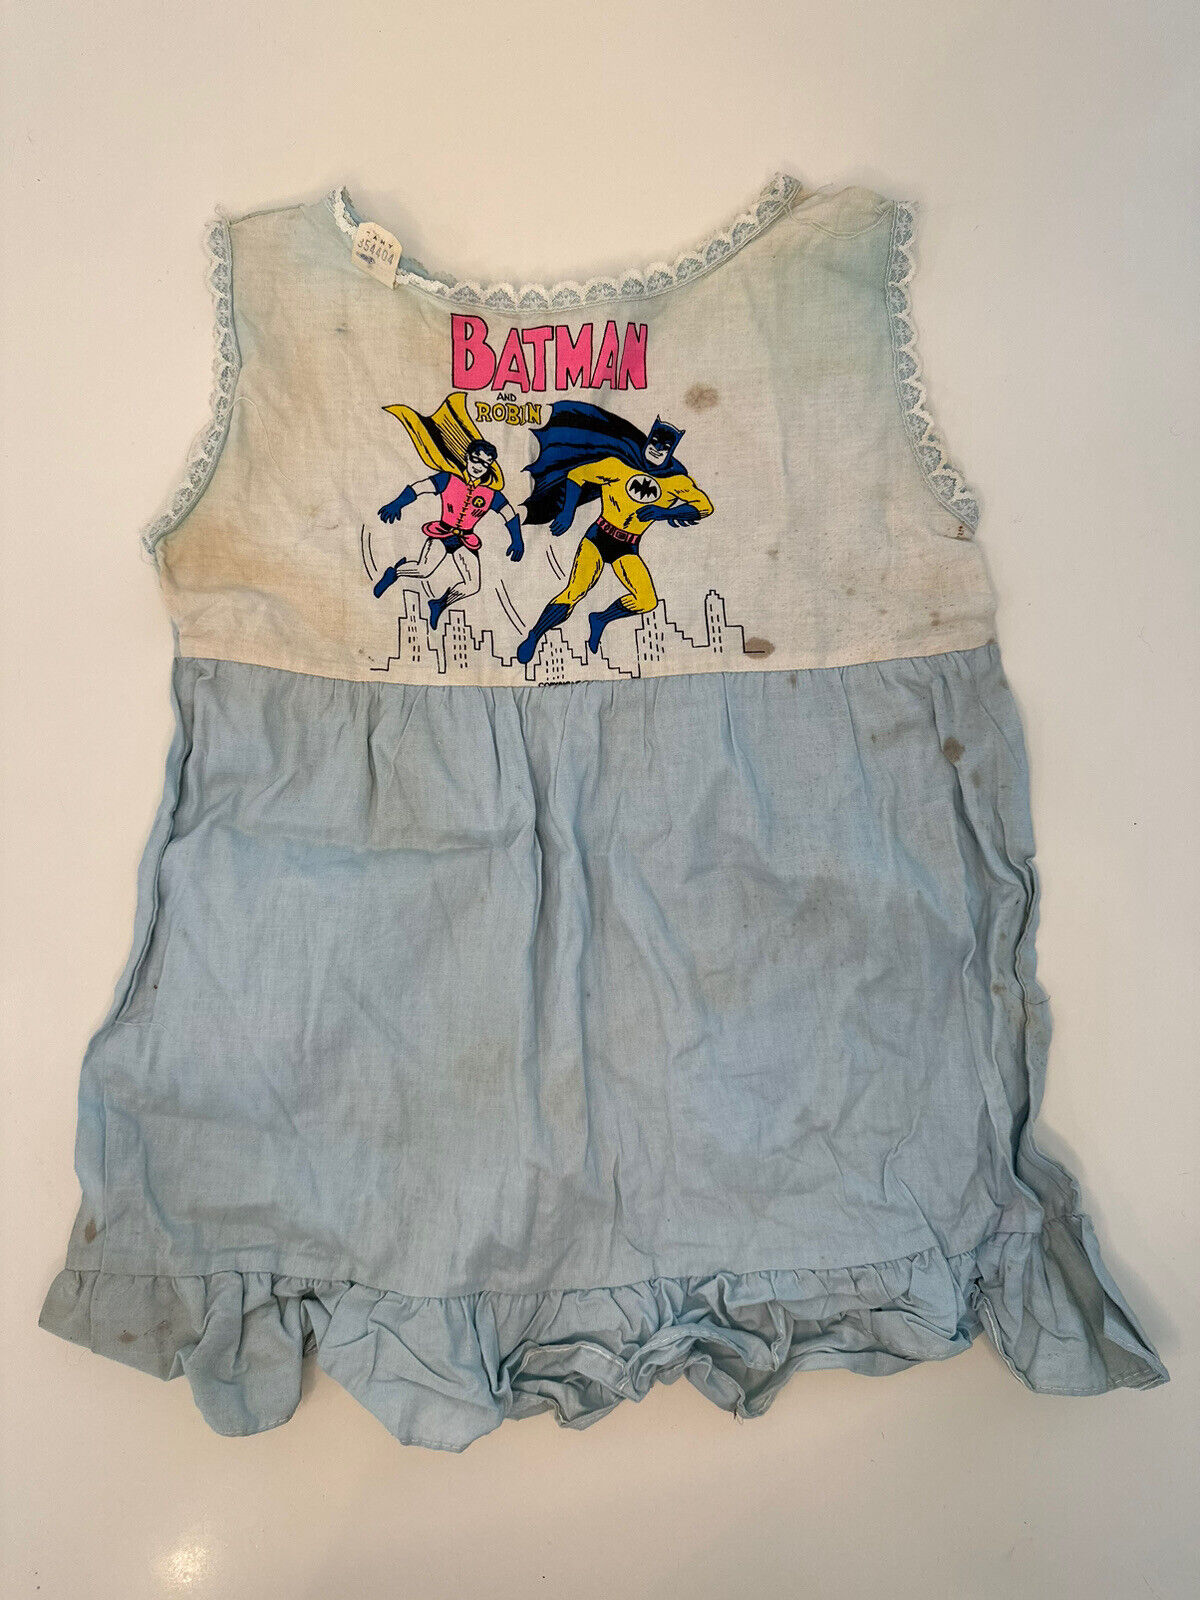 RARE Vintage 1966 BATMAN & ROBIN Childs Dress Nightgown Clothing Union Made USA